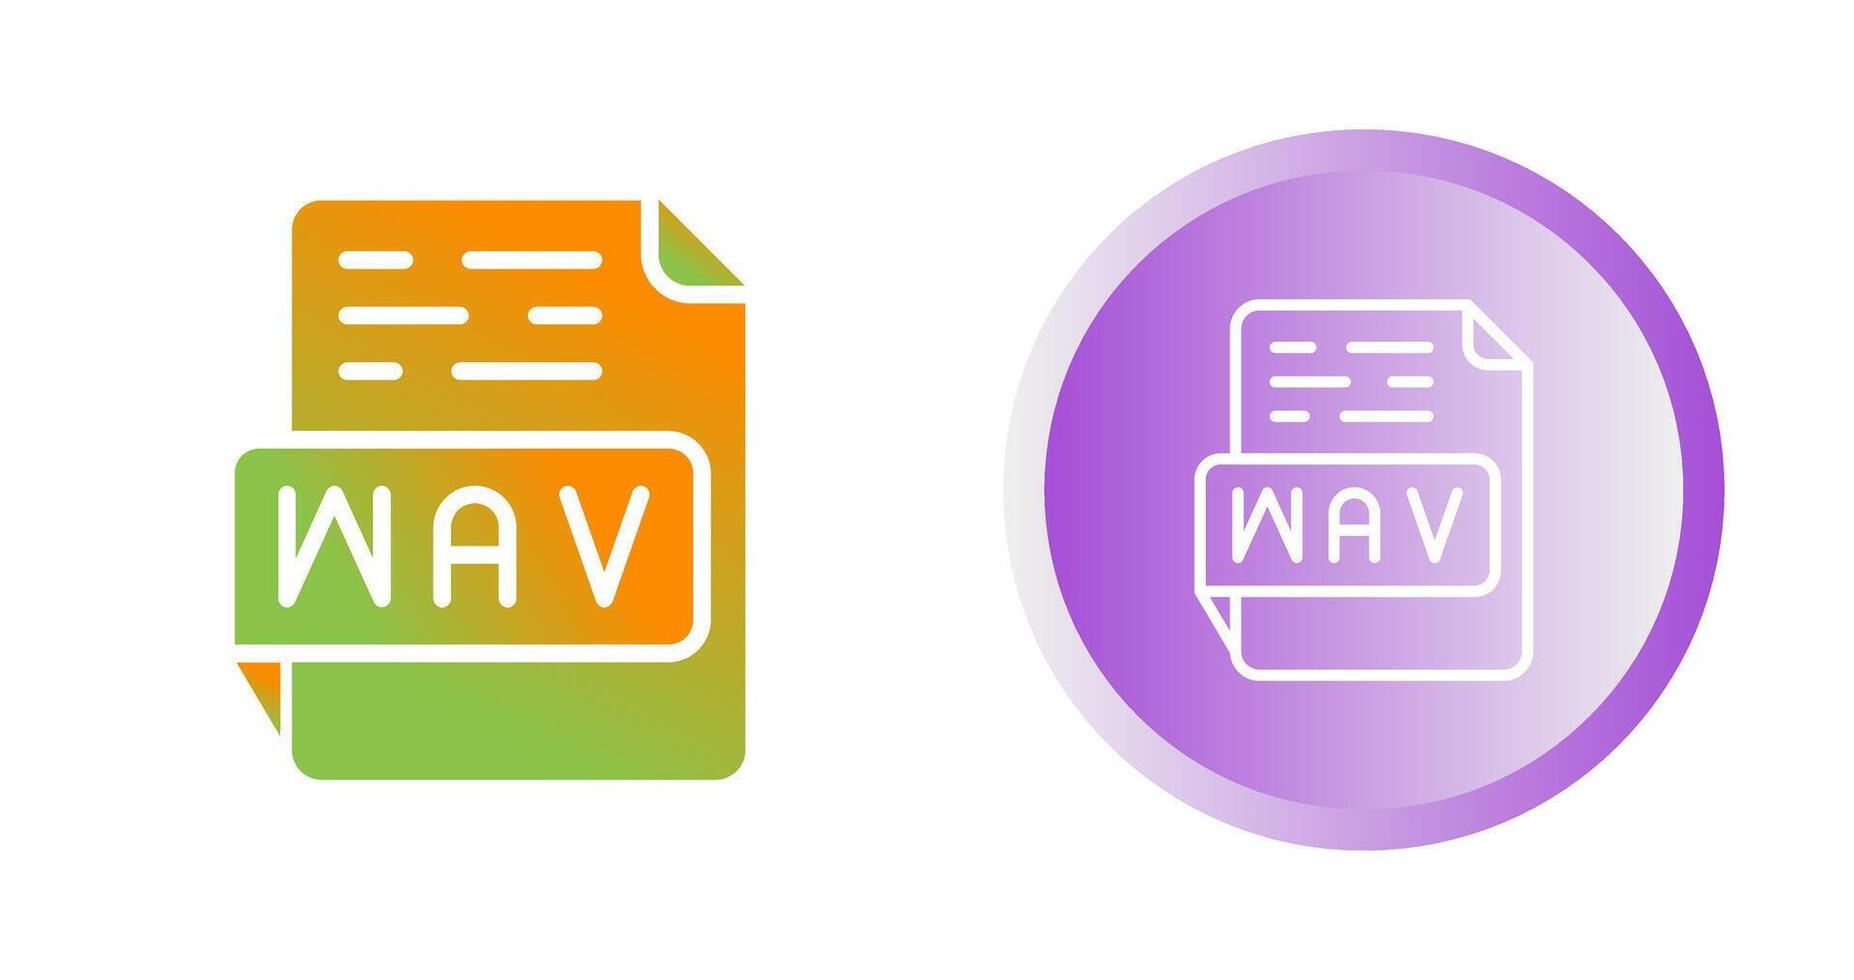 wAV vektor ikon